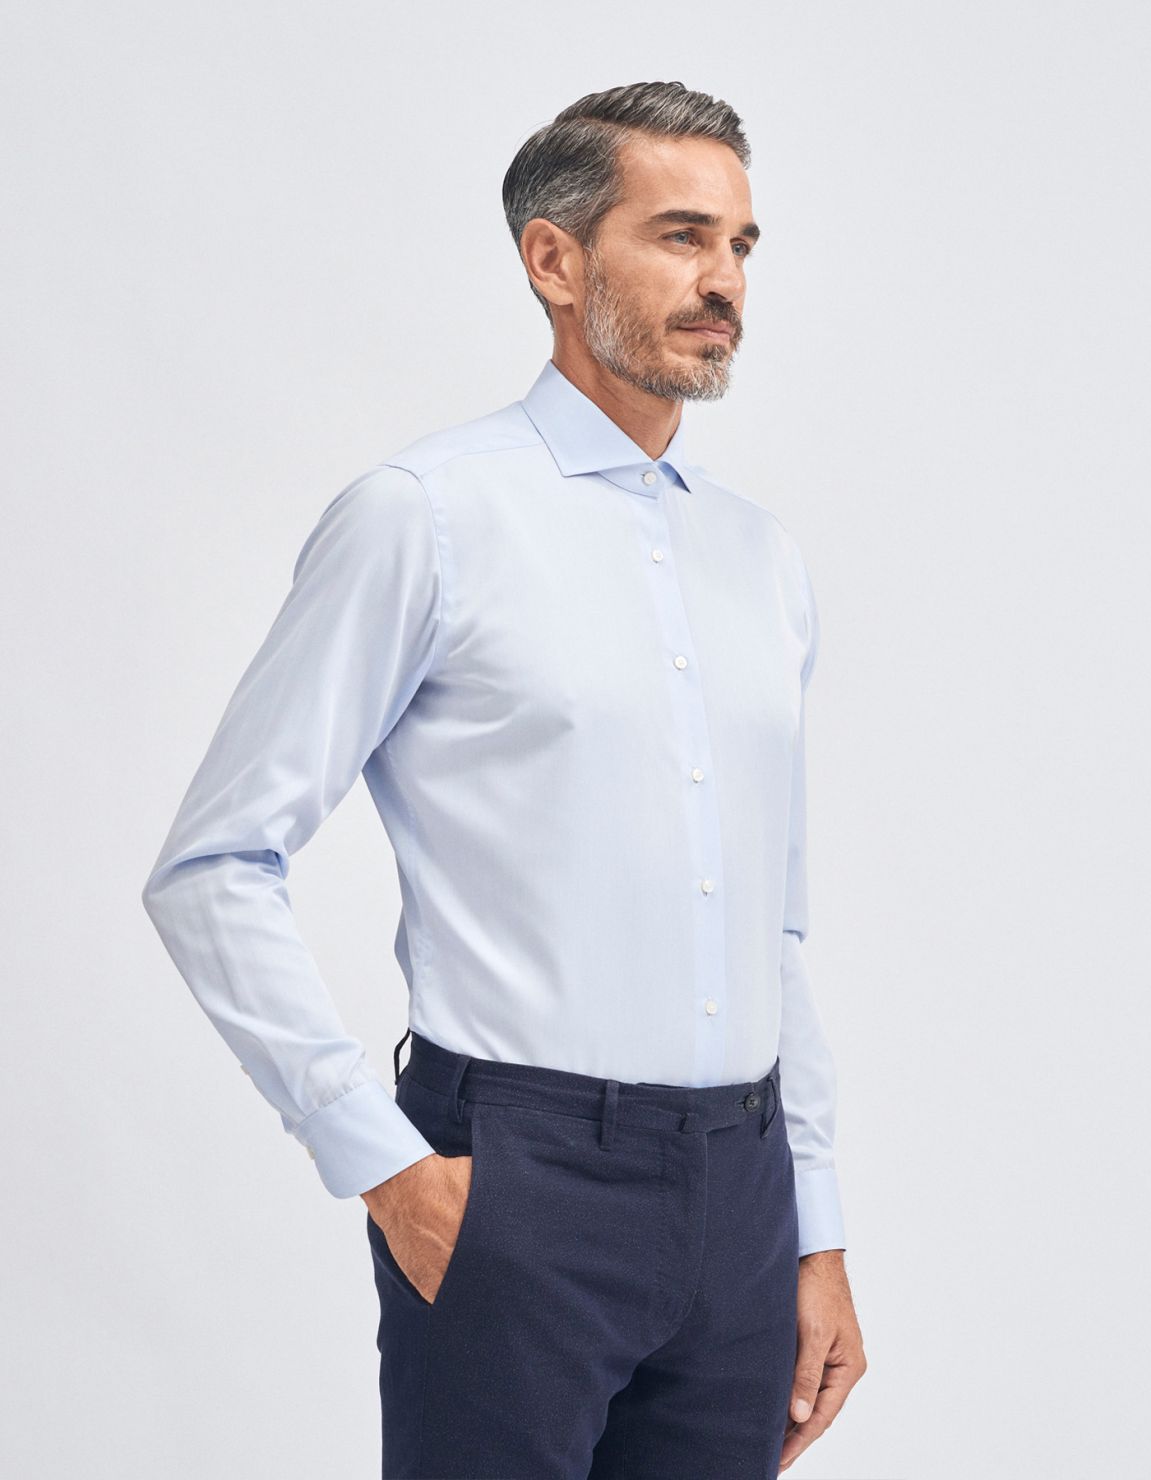 Shirt Collar cutaway Light Blue Twill Tailor Custom Fit 1